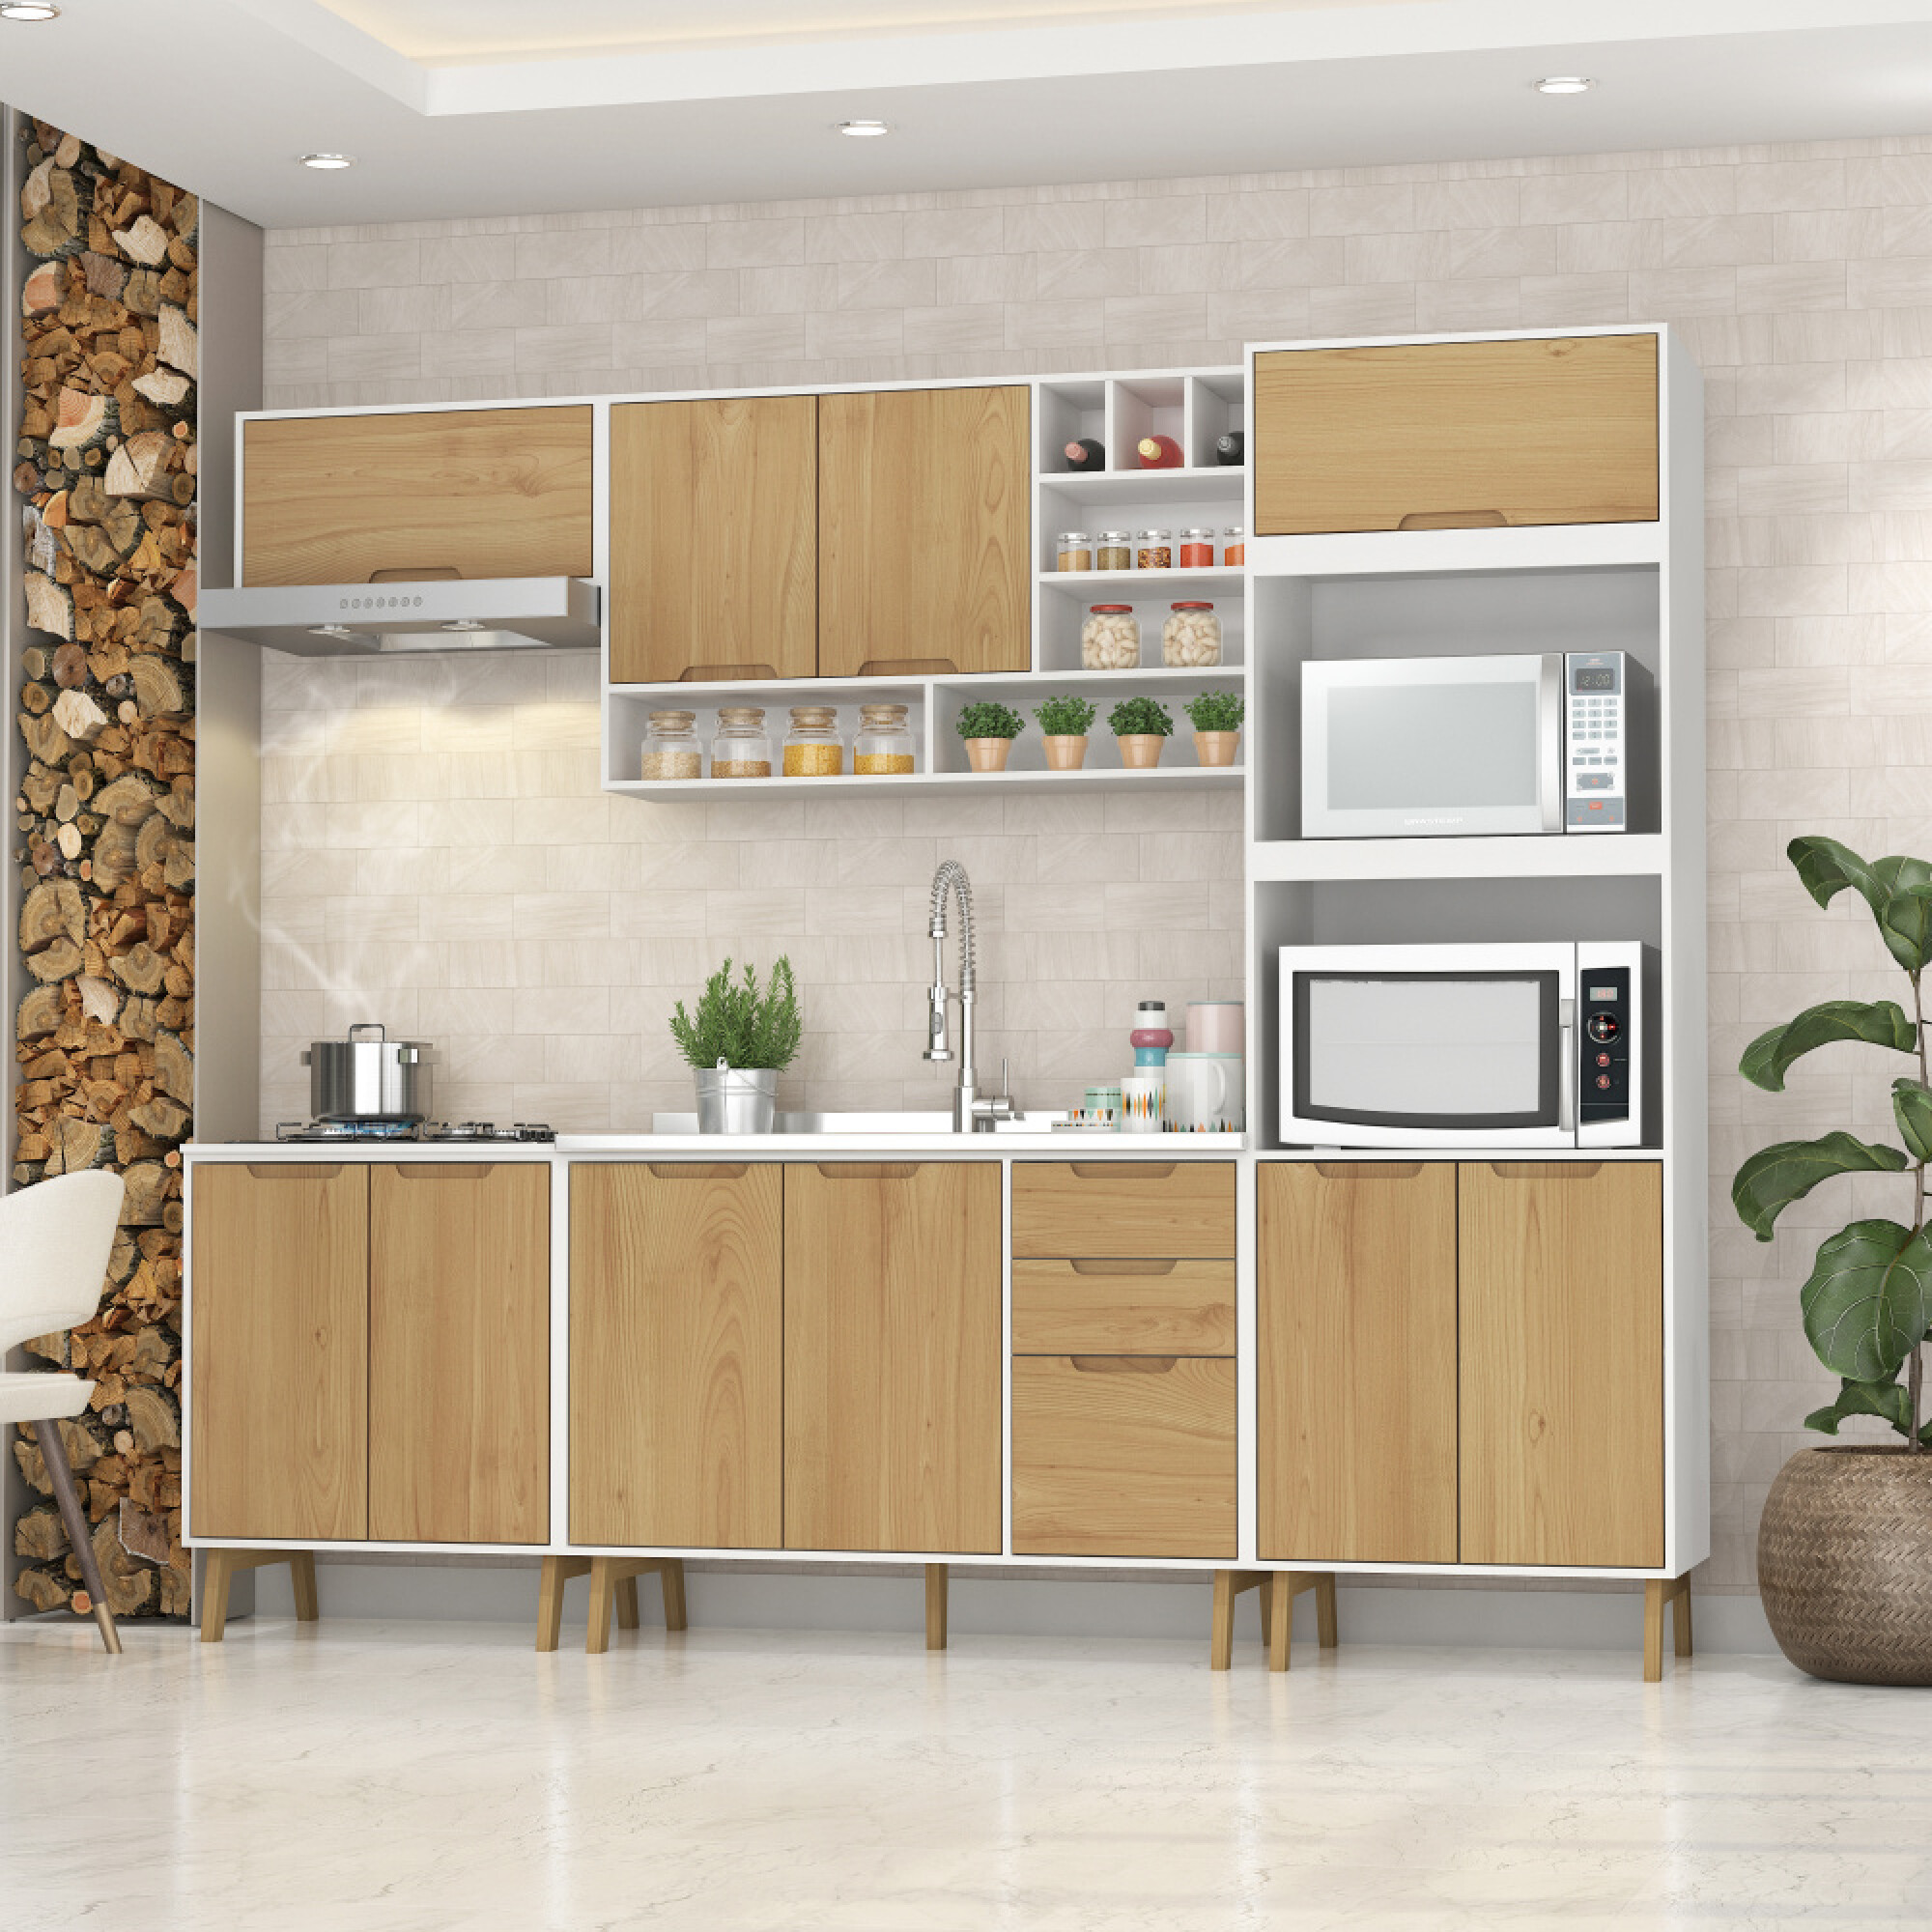 Mueble Alacena Cocina Compacta C/mesada Incluida - $ 6.250,00  Alacenas de  cocina, Muebles aereos de cocina, Muebles de cocina